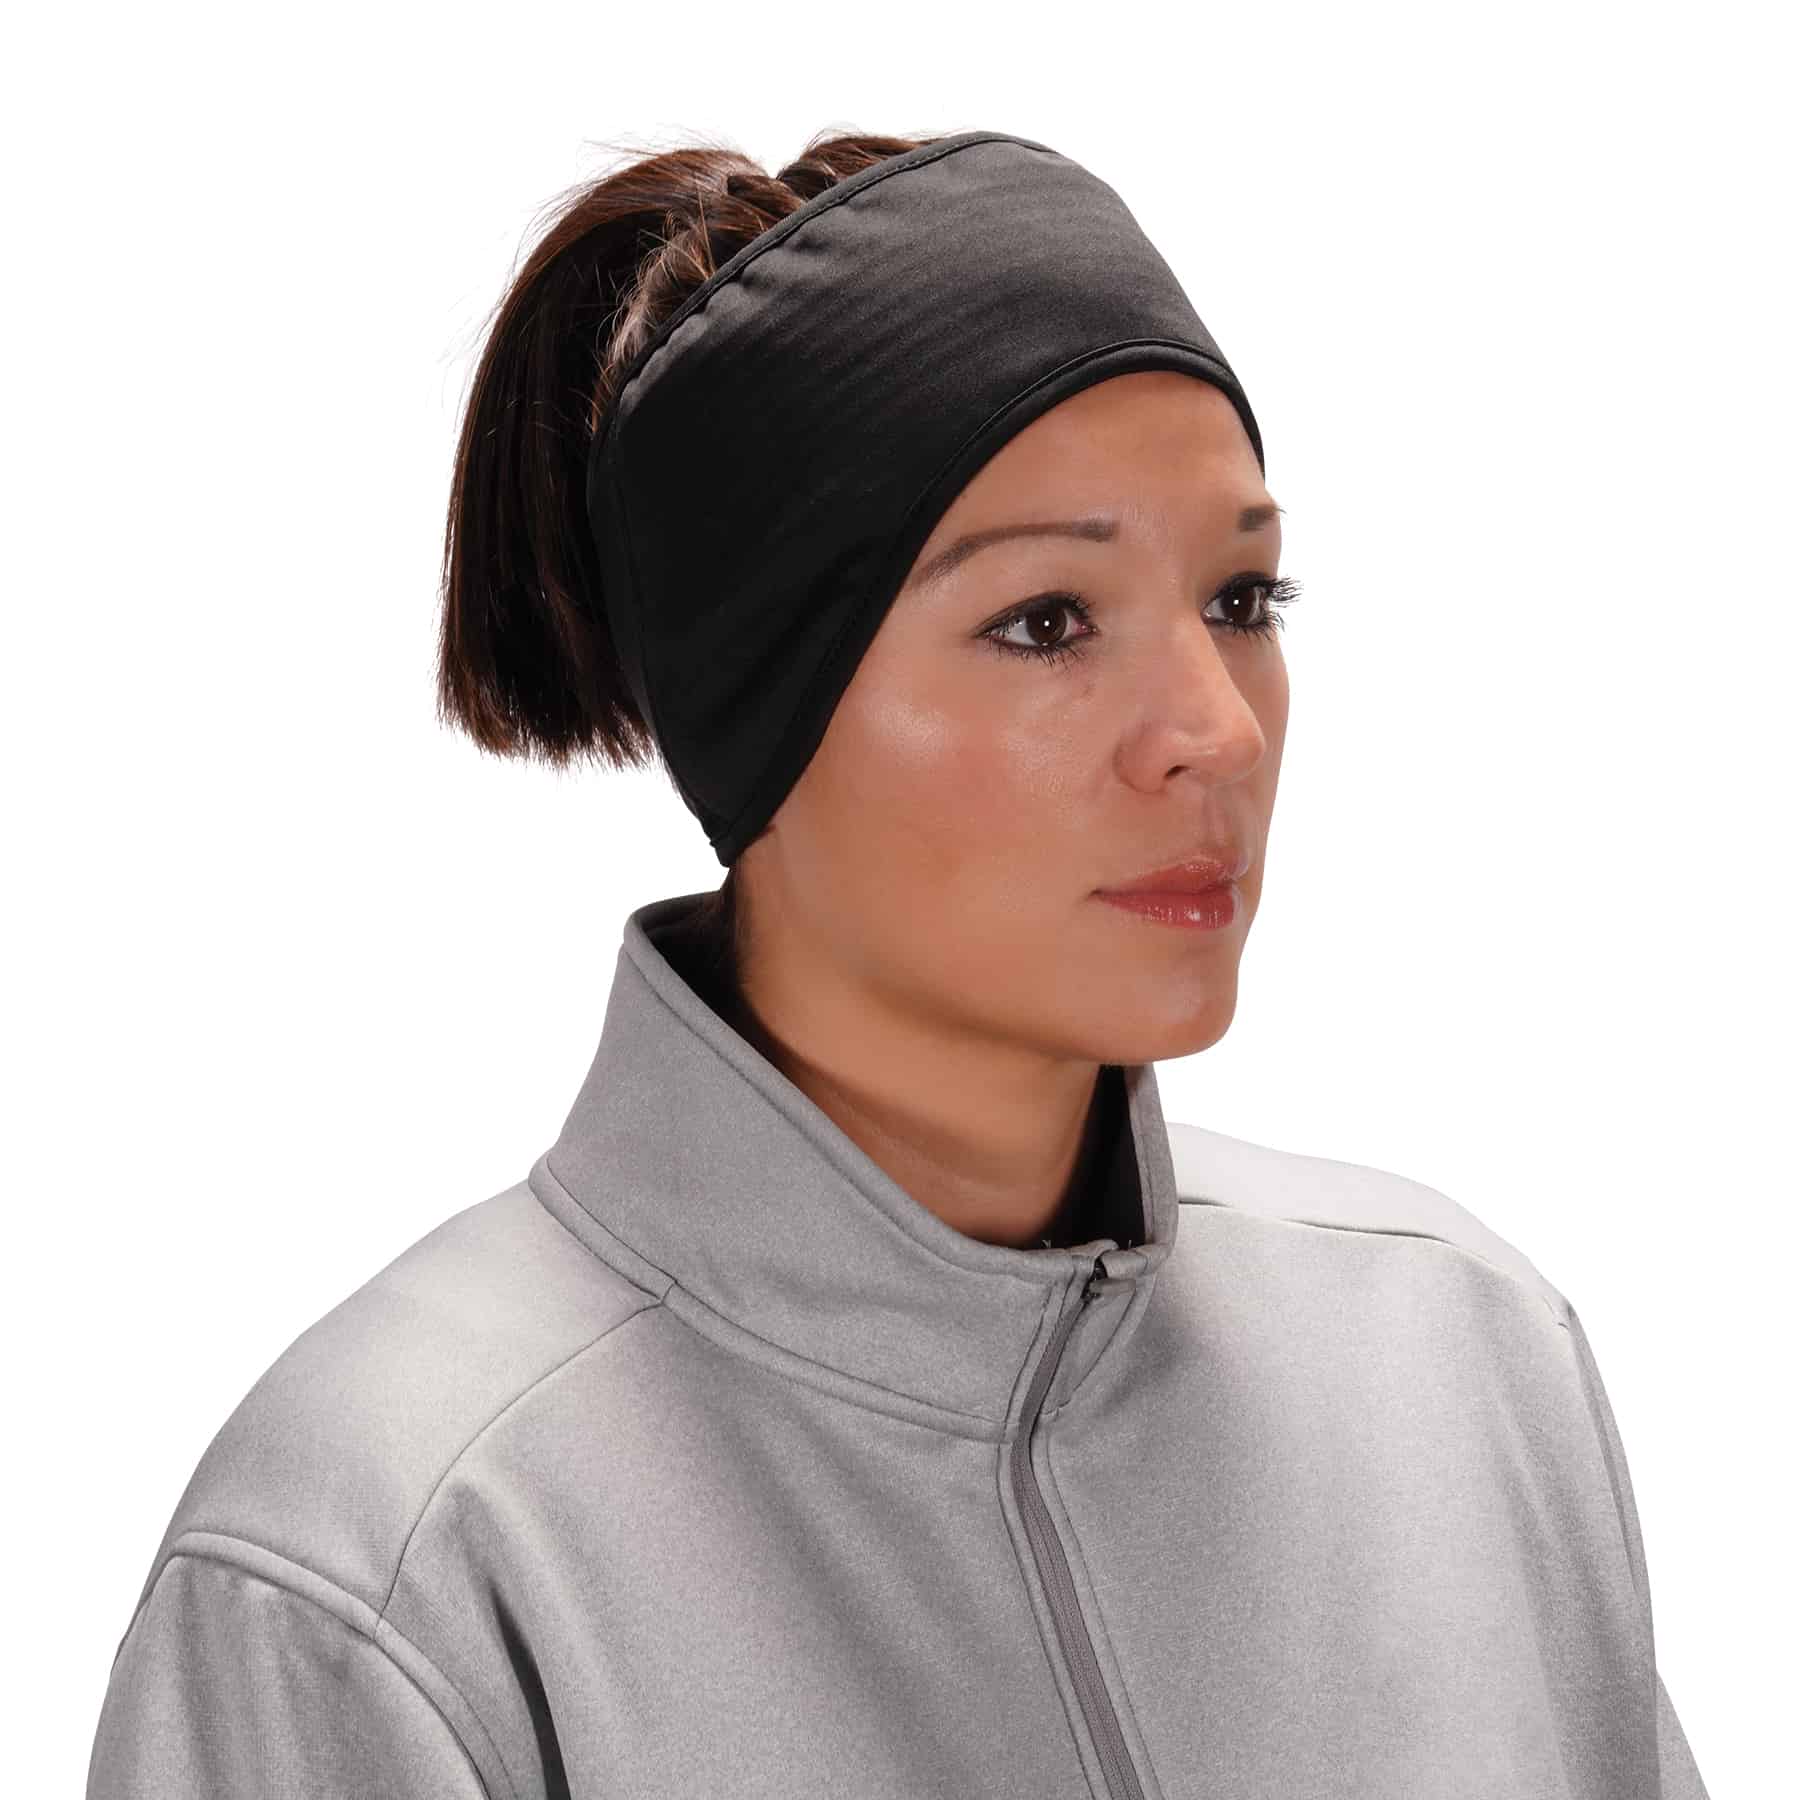 FH-910 Fleece Ear Warmer Headband for Women Stay Warm and Stylish